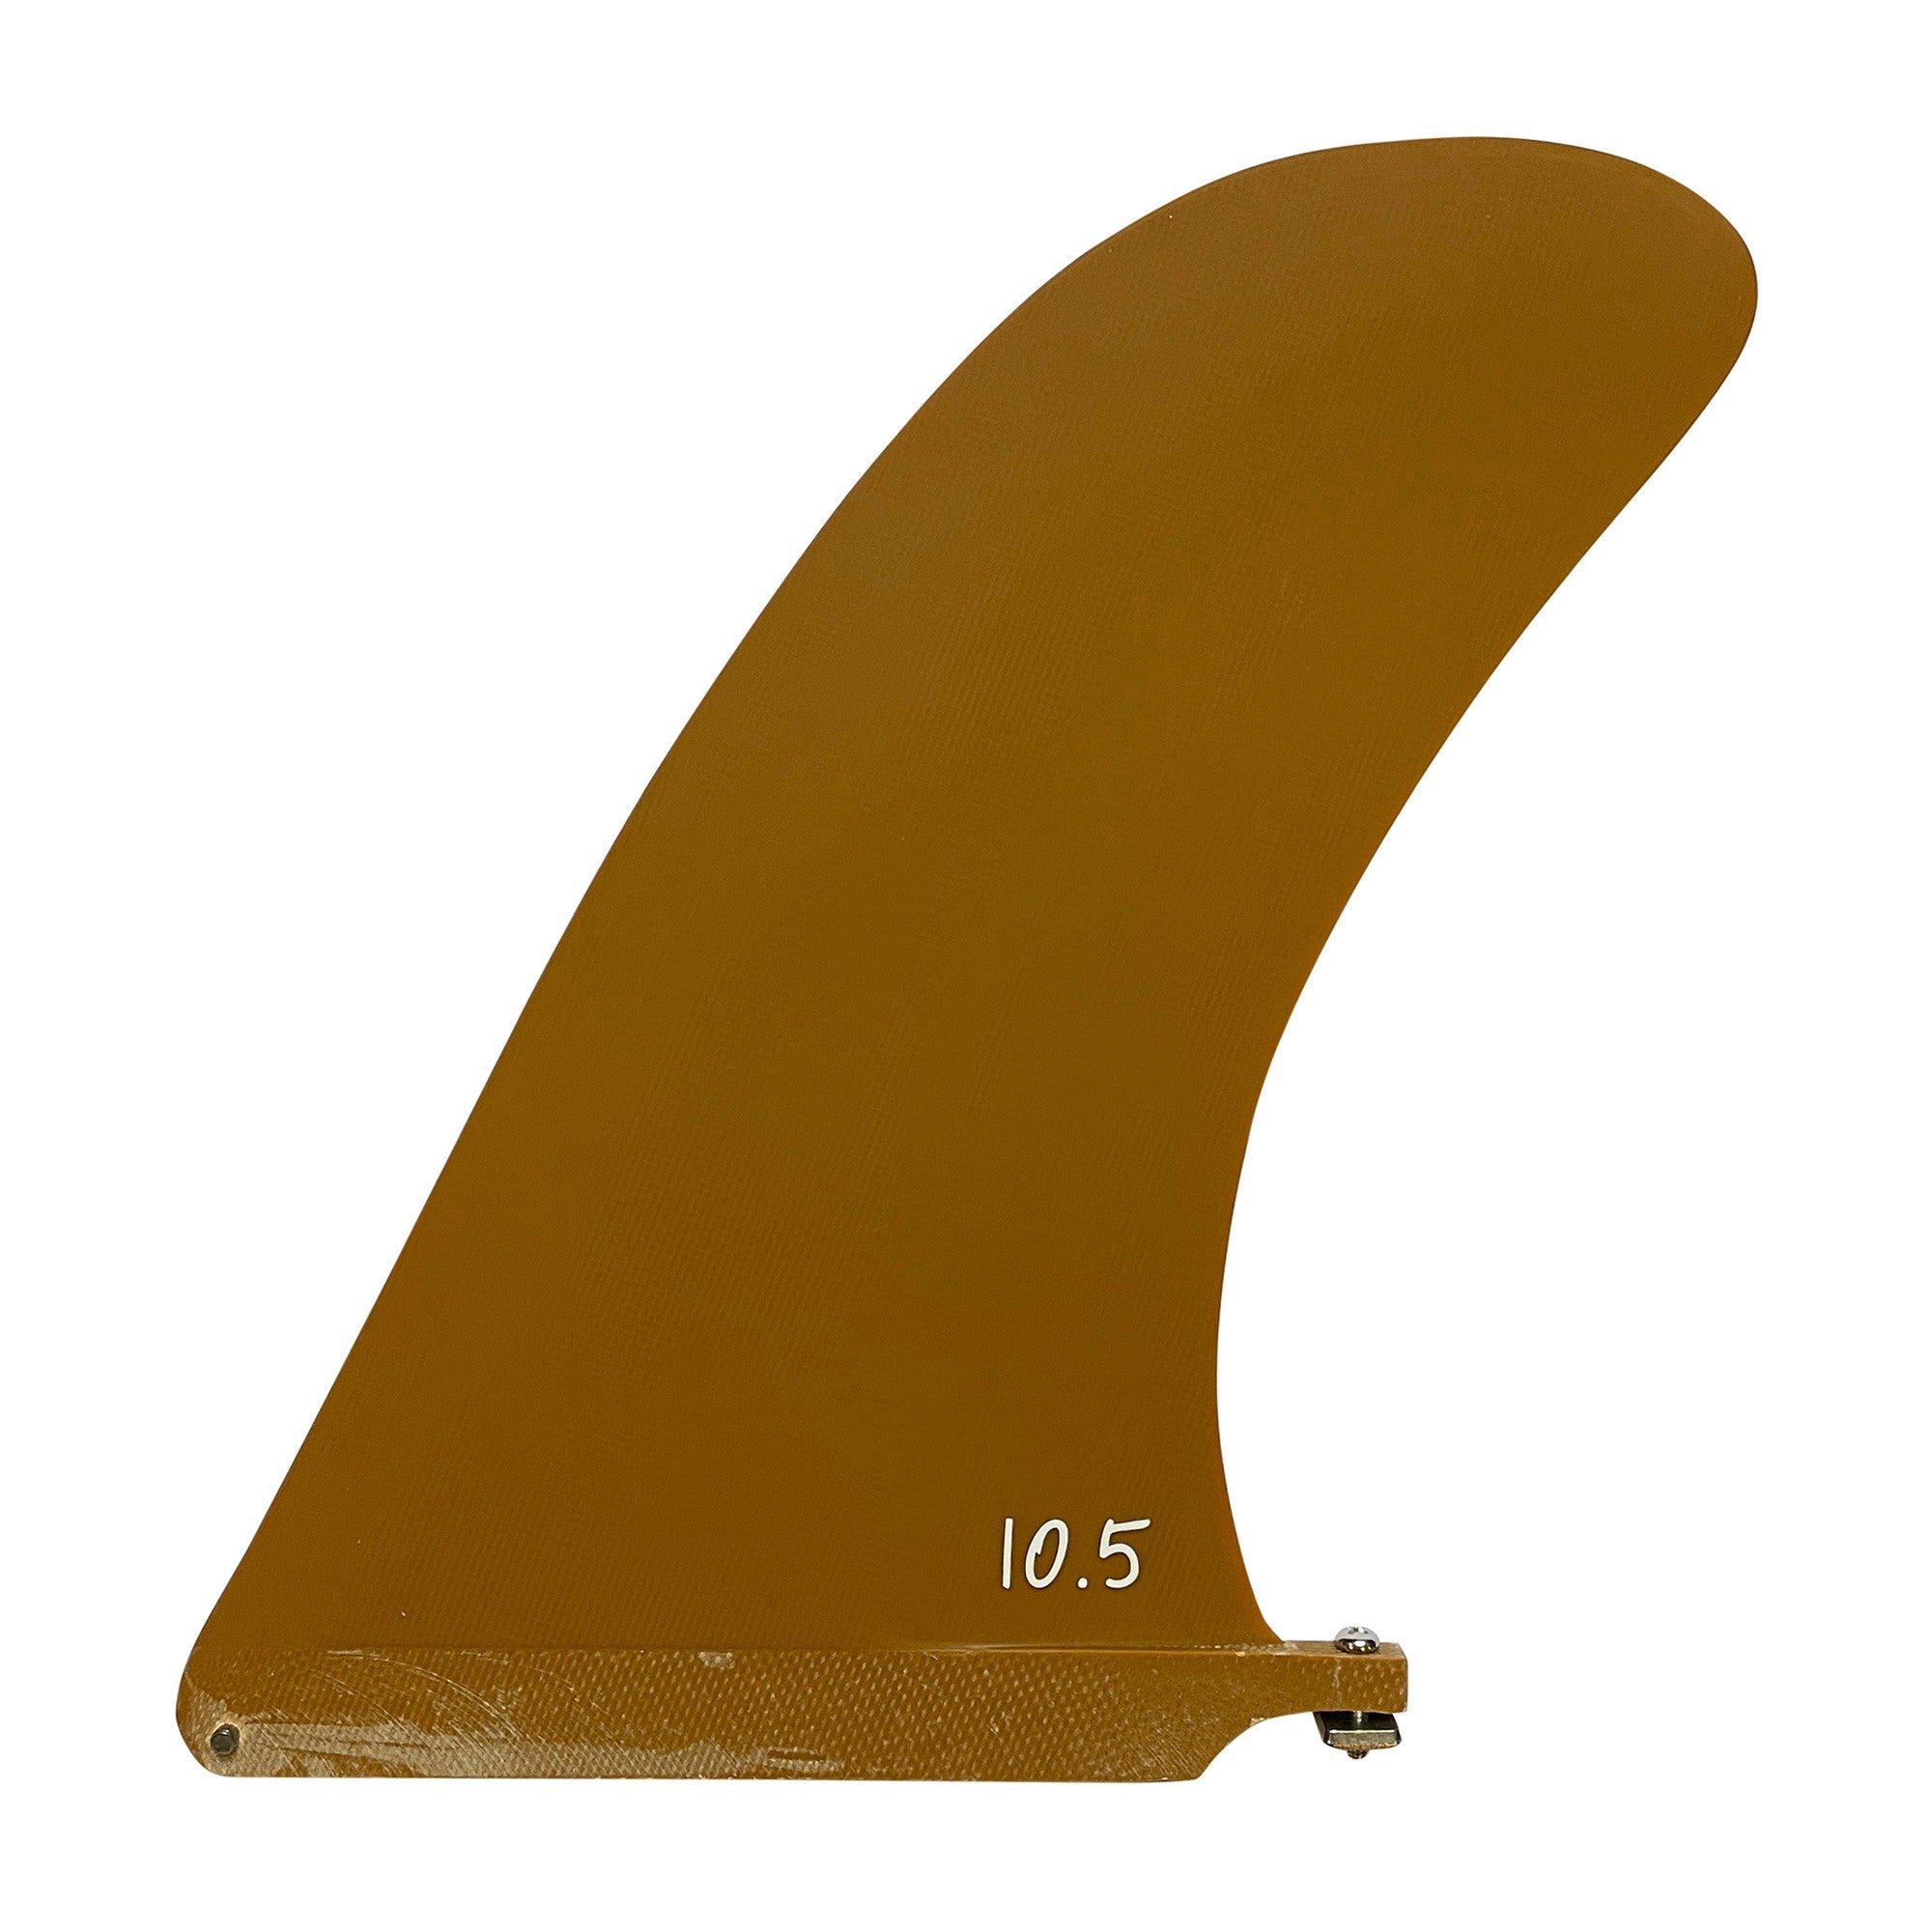 SURF SYSTEM - 10.5 Pivot Fiberglass Single Fin (Us Box) - Avocado